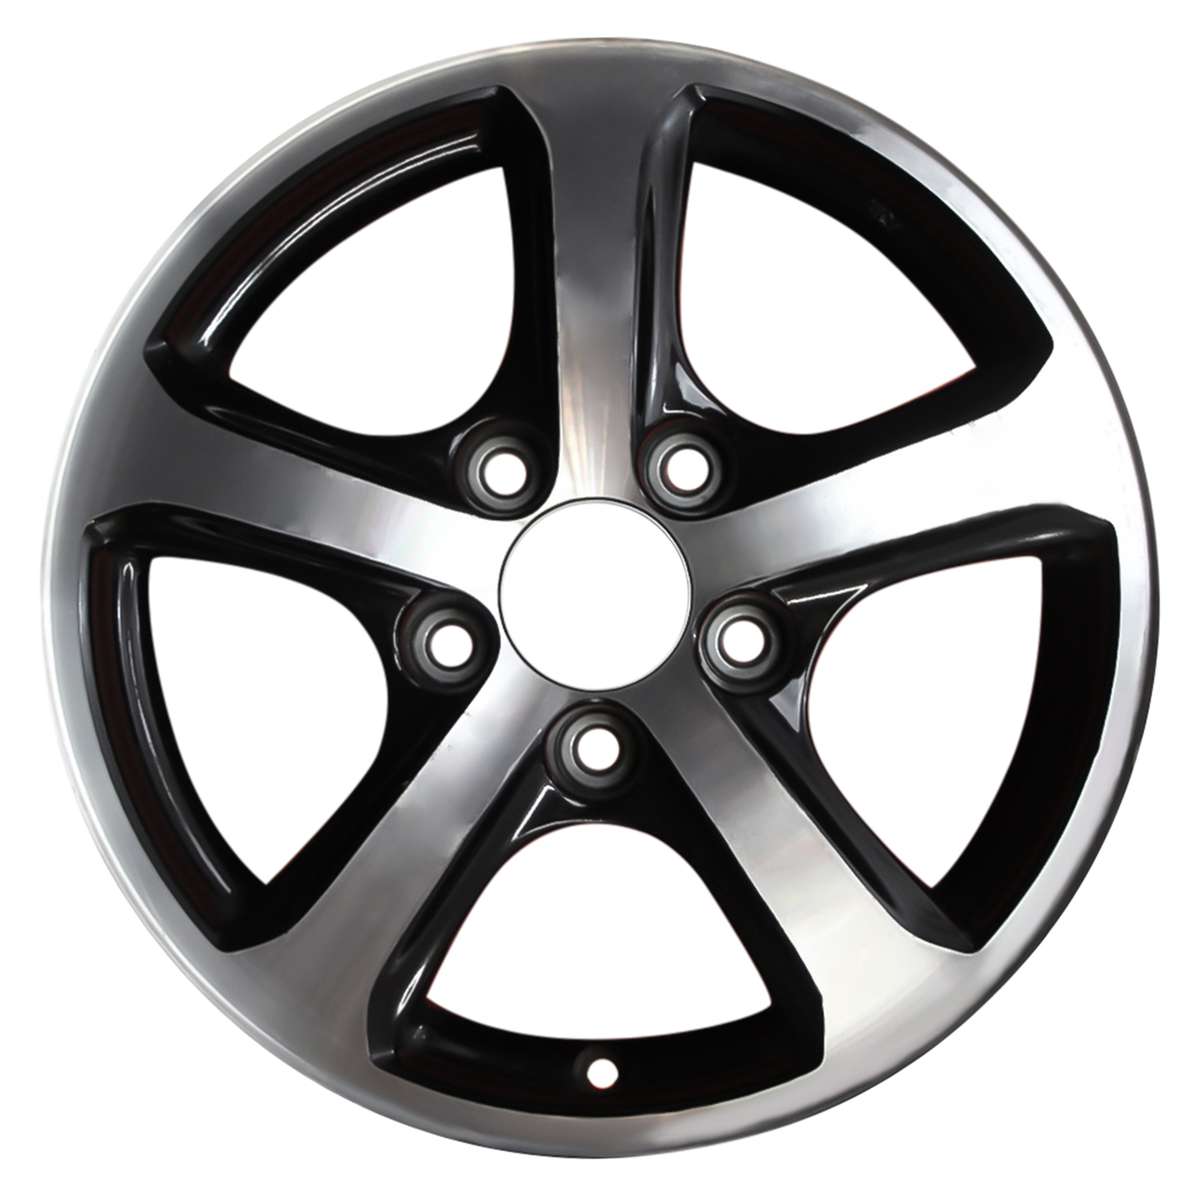 2012 Honda Civic 15" OEM Wheel Rim W64027MB